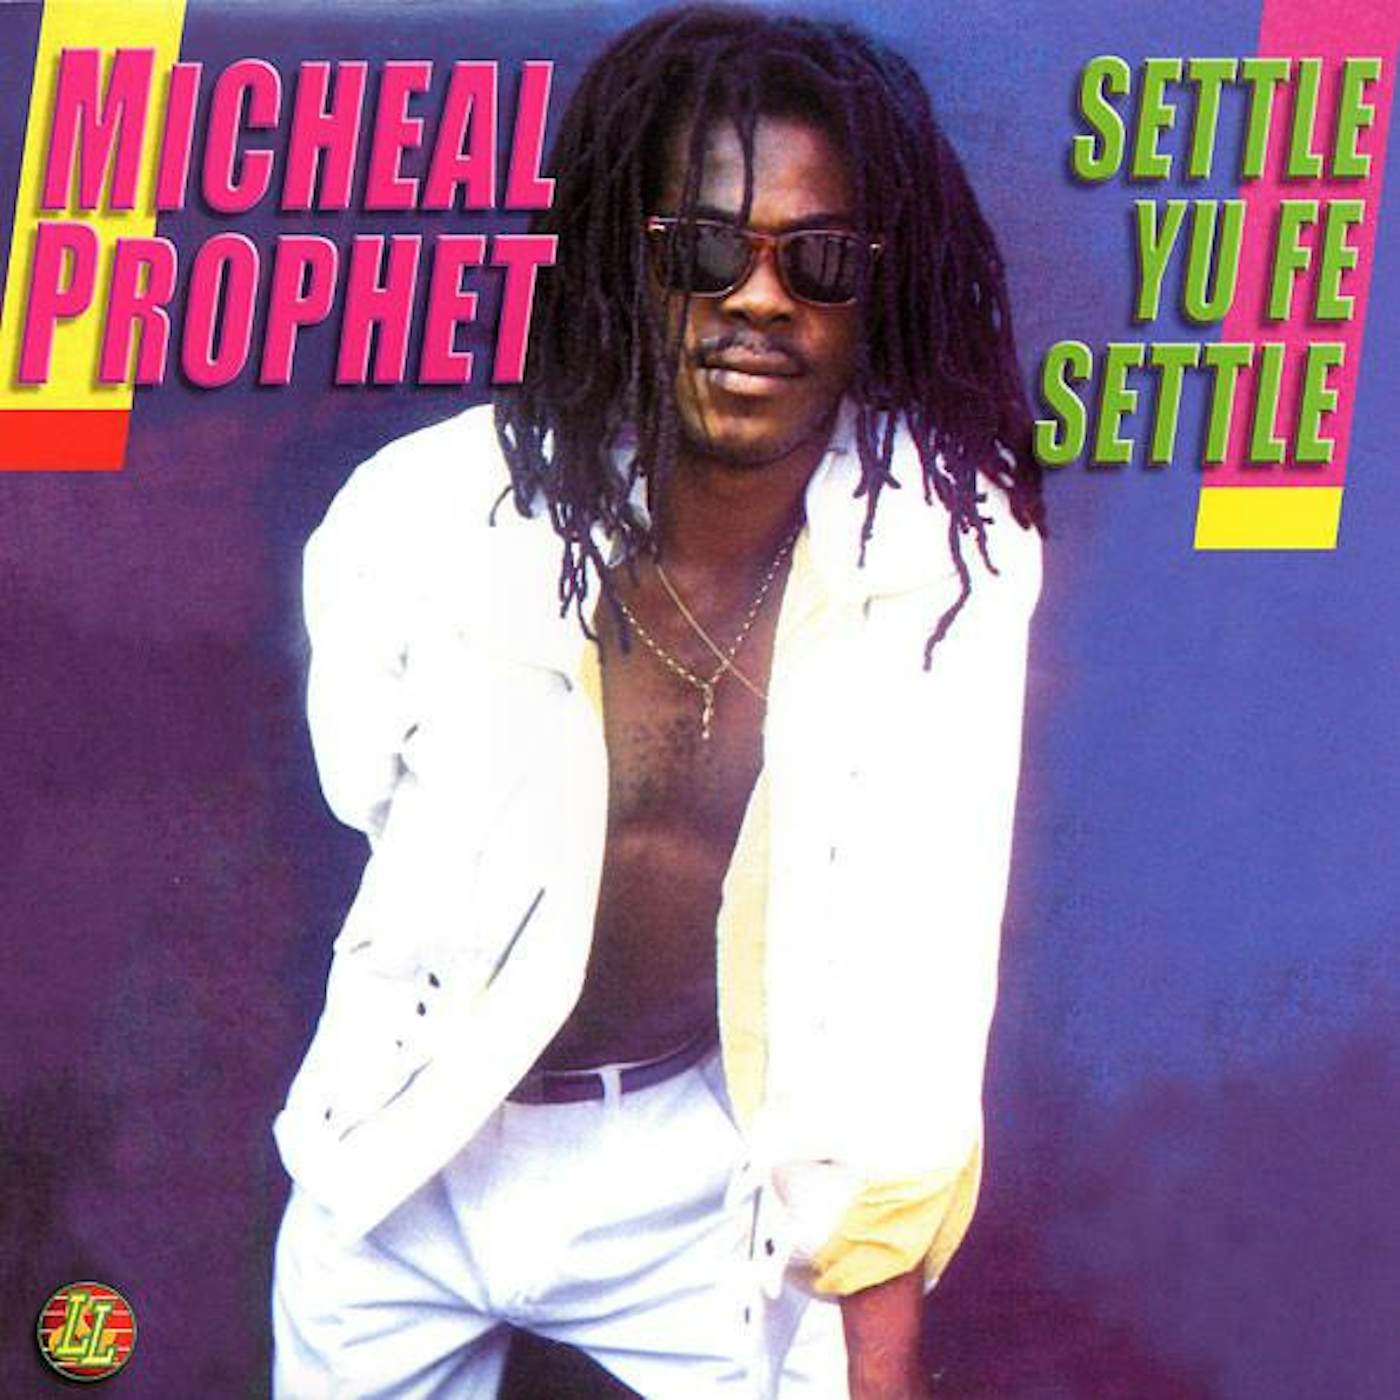 Michael Prophet SETTLE YU FE SETTLE Vinyl Record